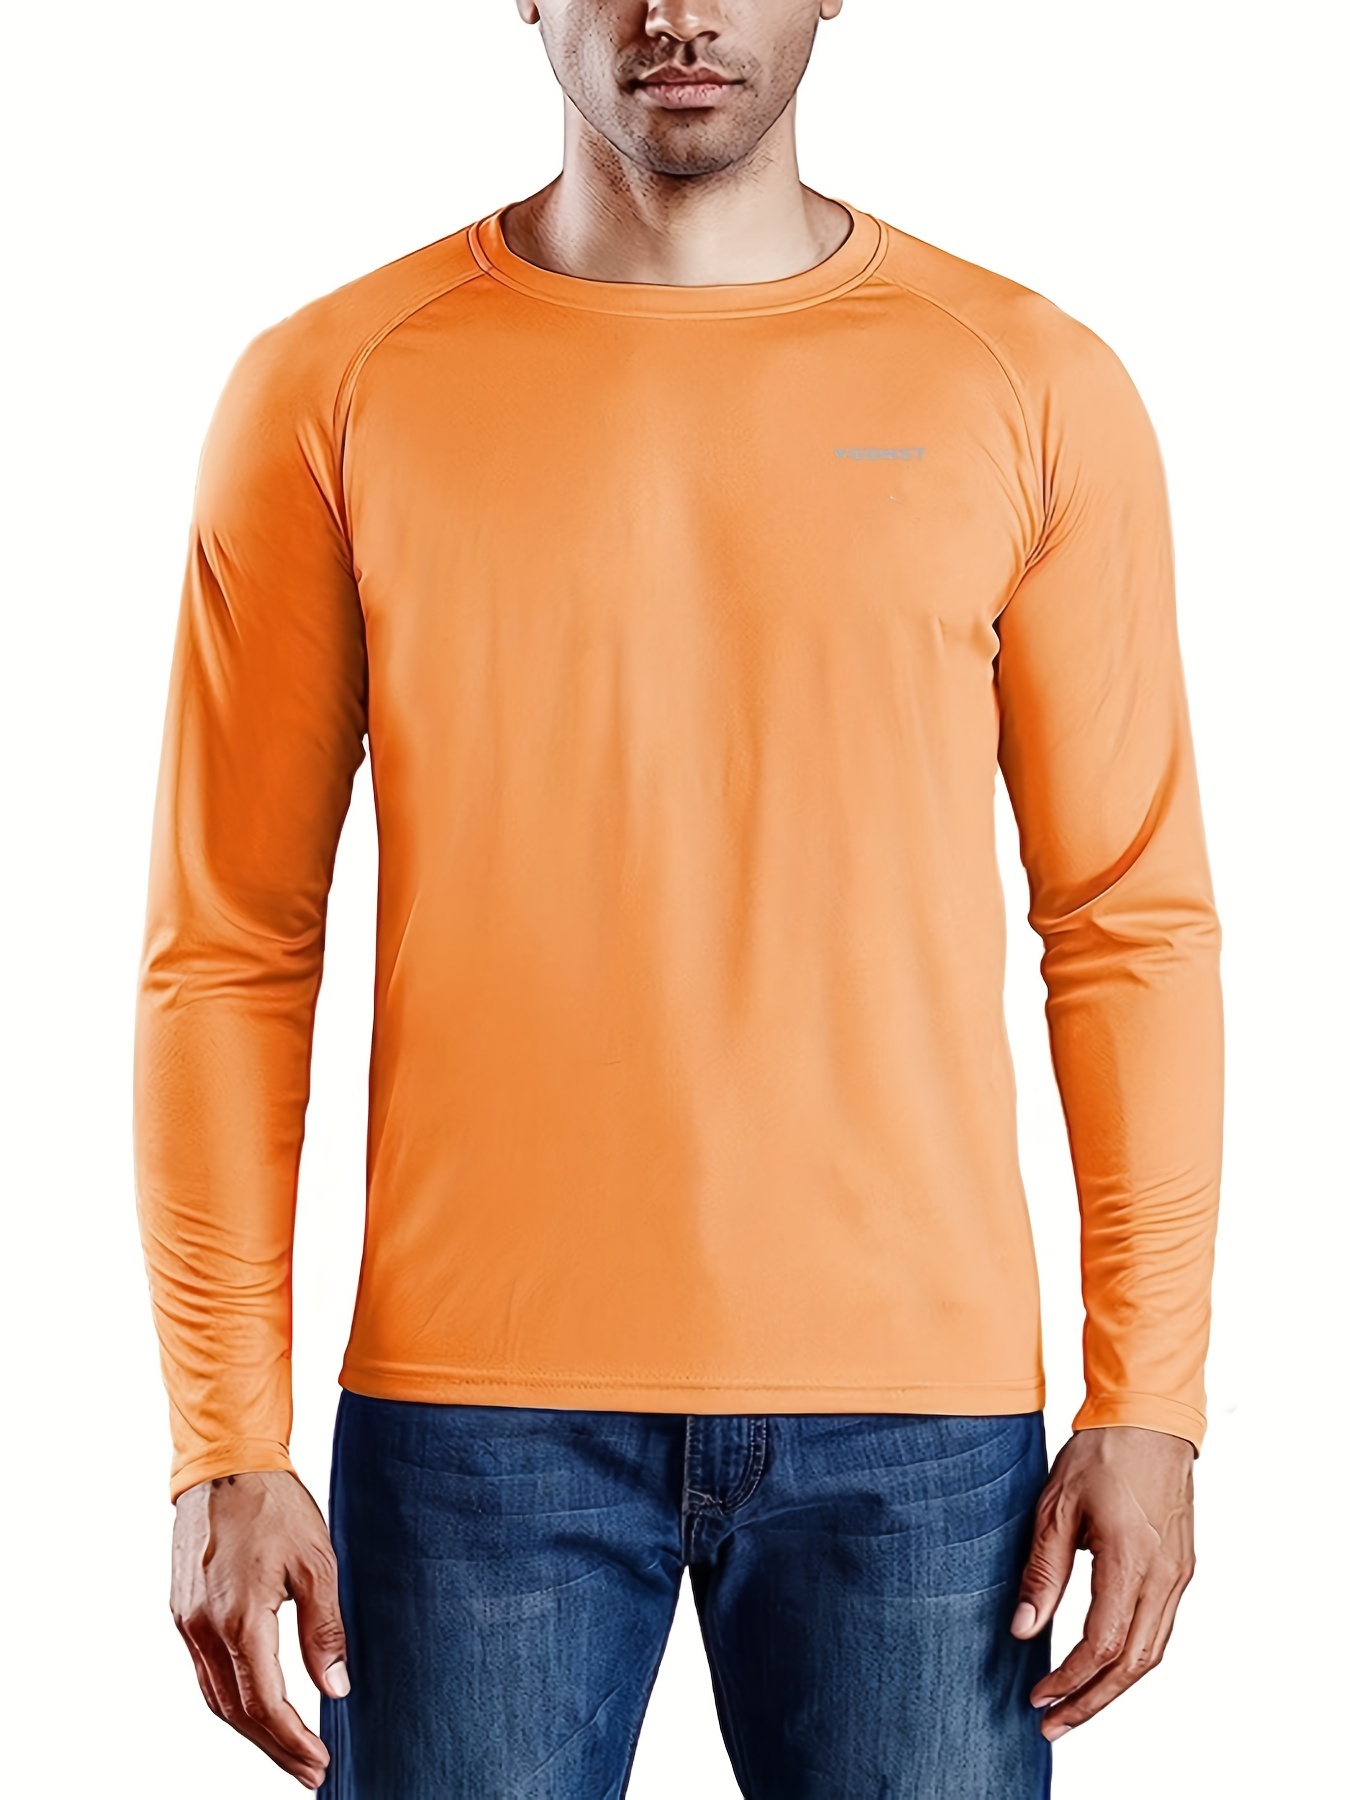 Mens Dry-Fit UPF 50+ Sun Shirt, Fishing Shirts for Men Long Sleeve, SPF Shirts for Men, Men's Rash Guard Shirts